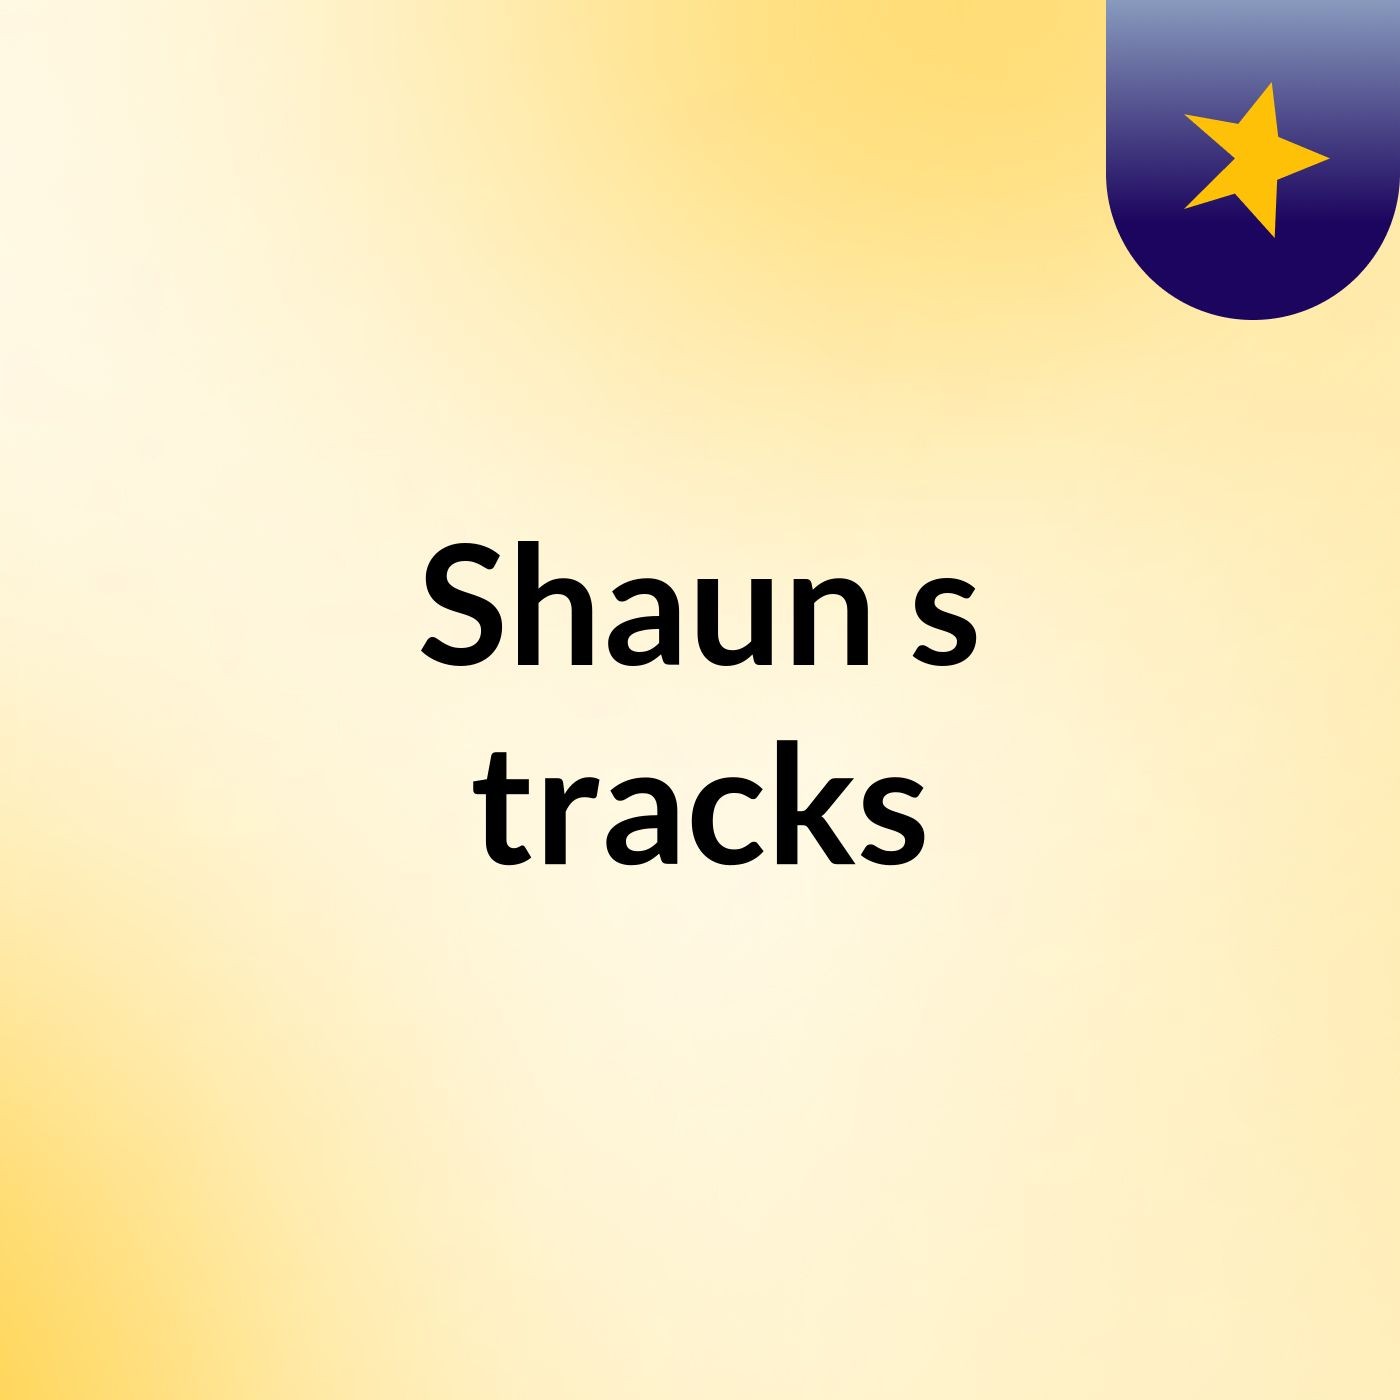 Shaun's tracks